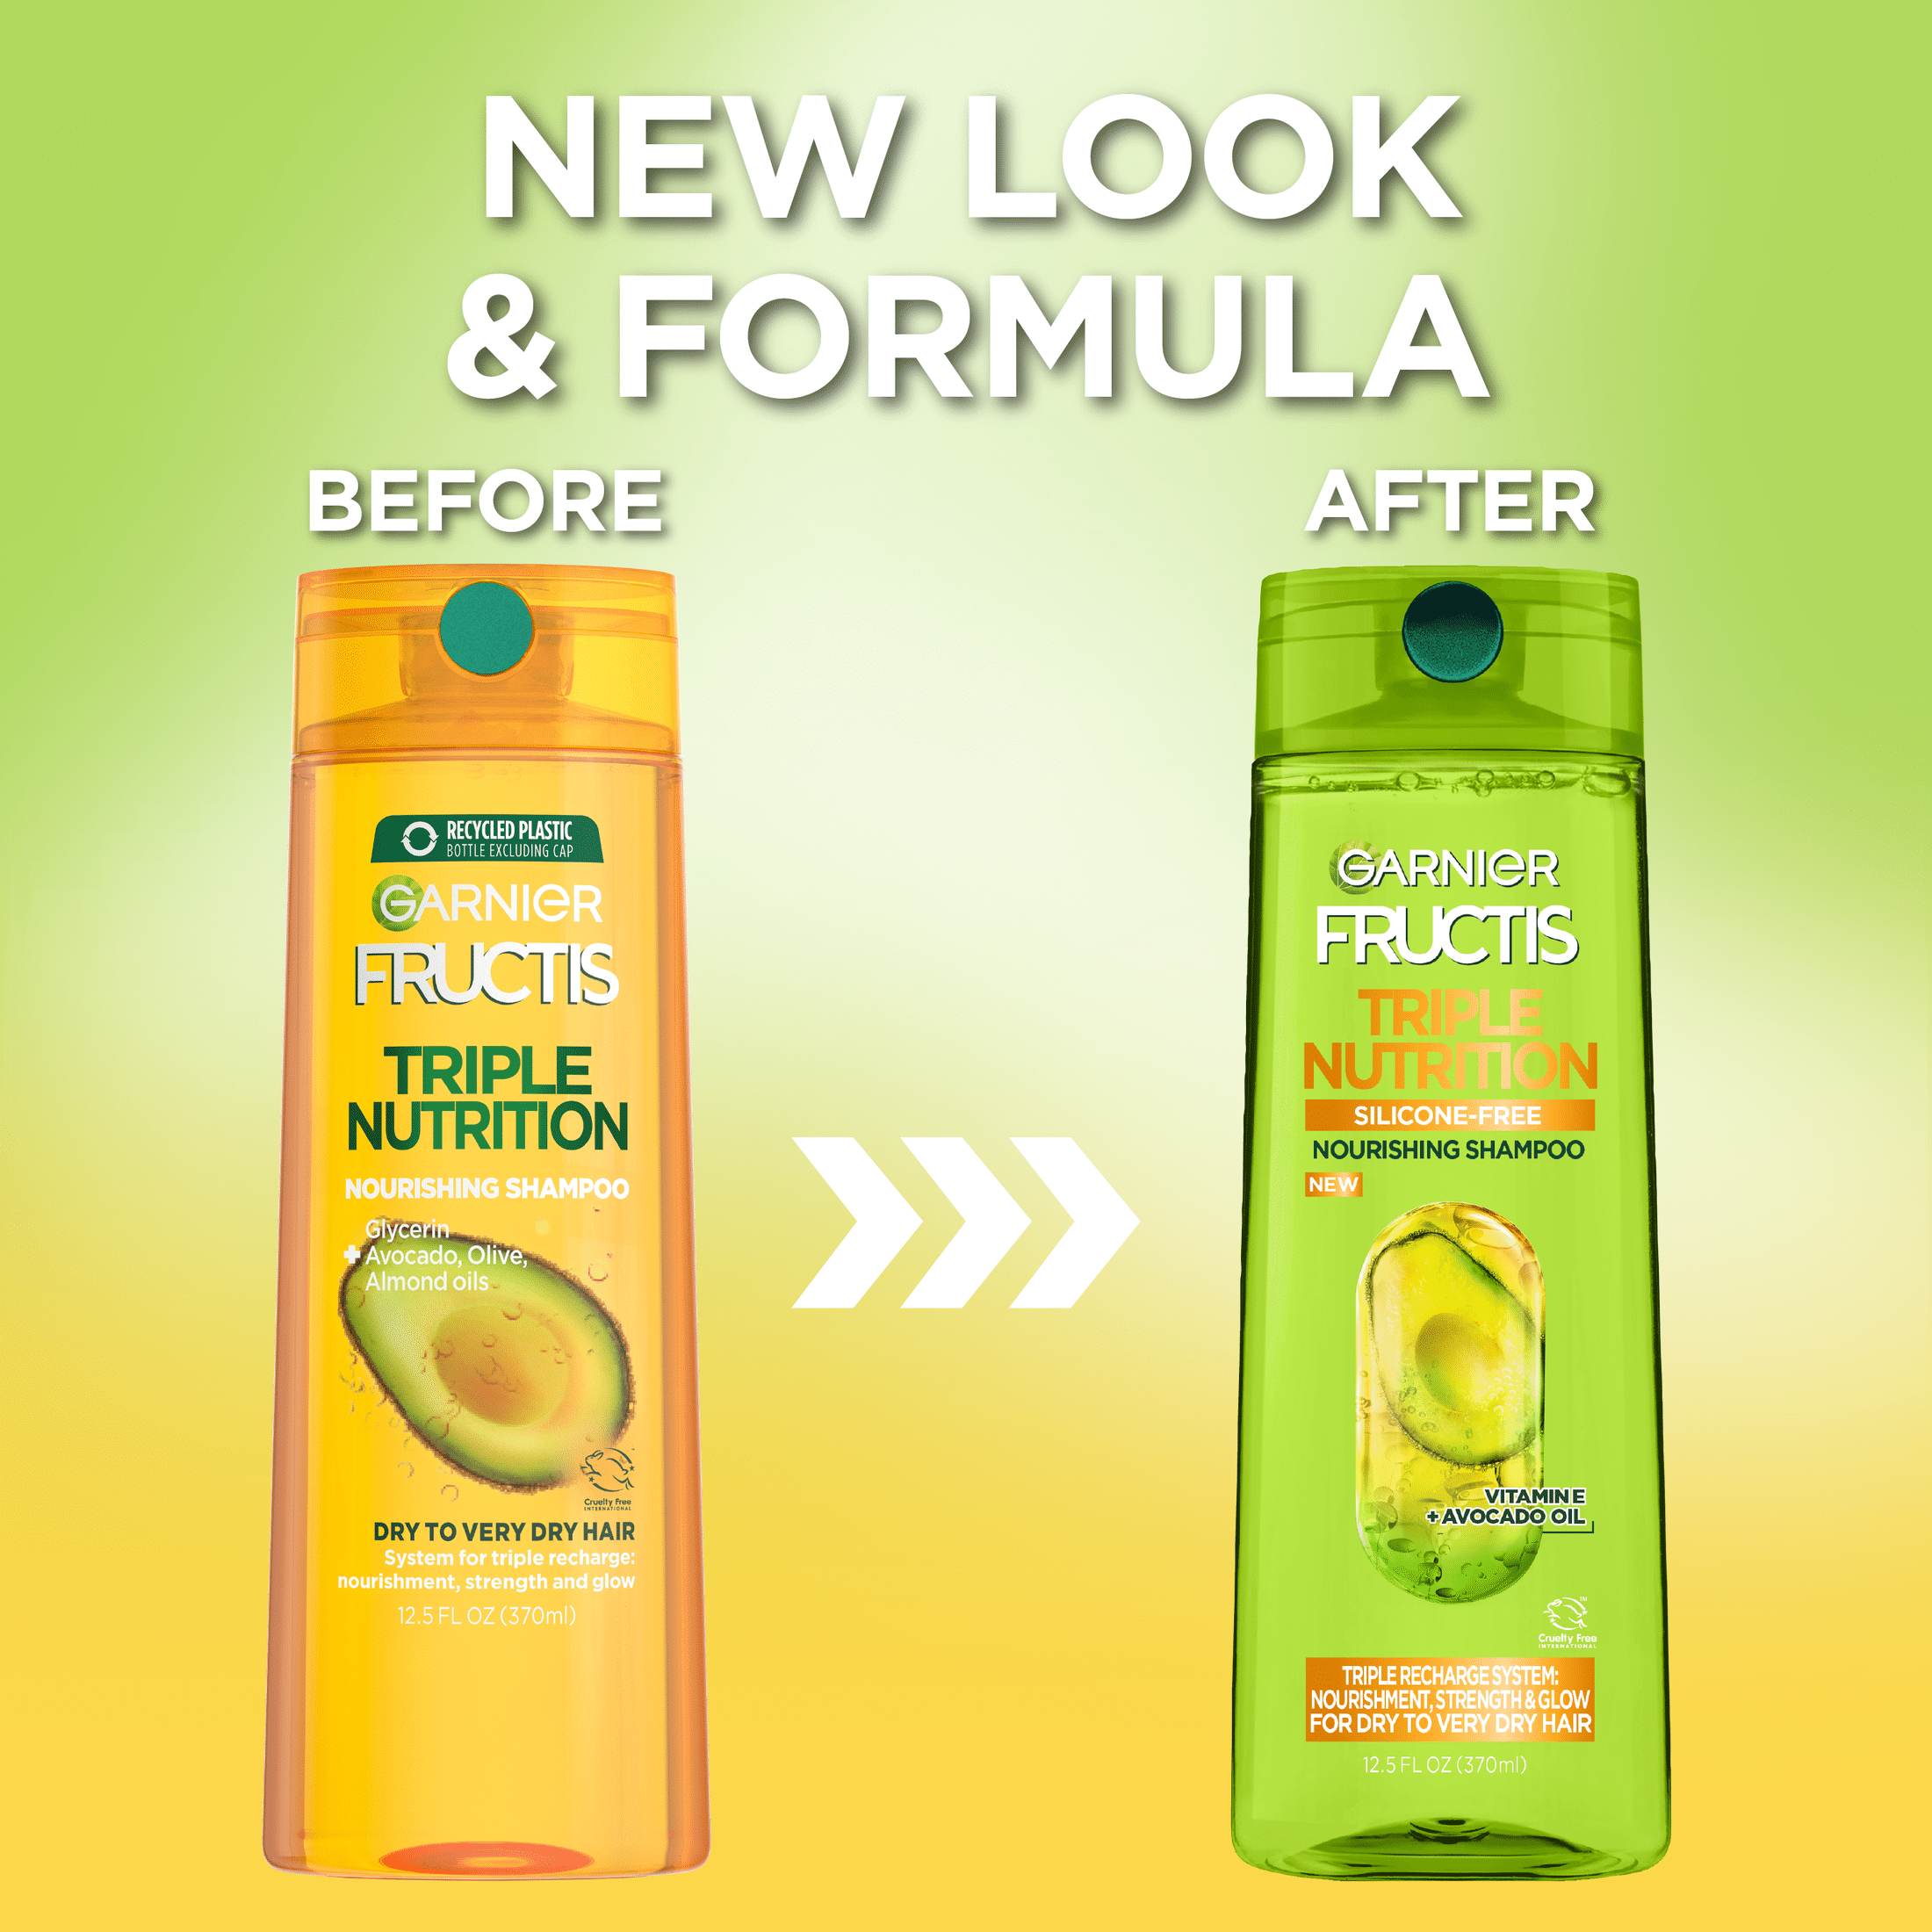 Garnier Fructis Triple Nutrition Shampoo, Very Dry Dry fl Hair, oz to 12.5